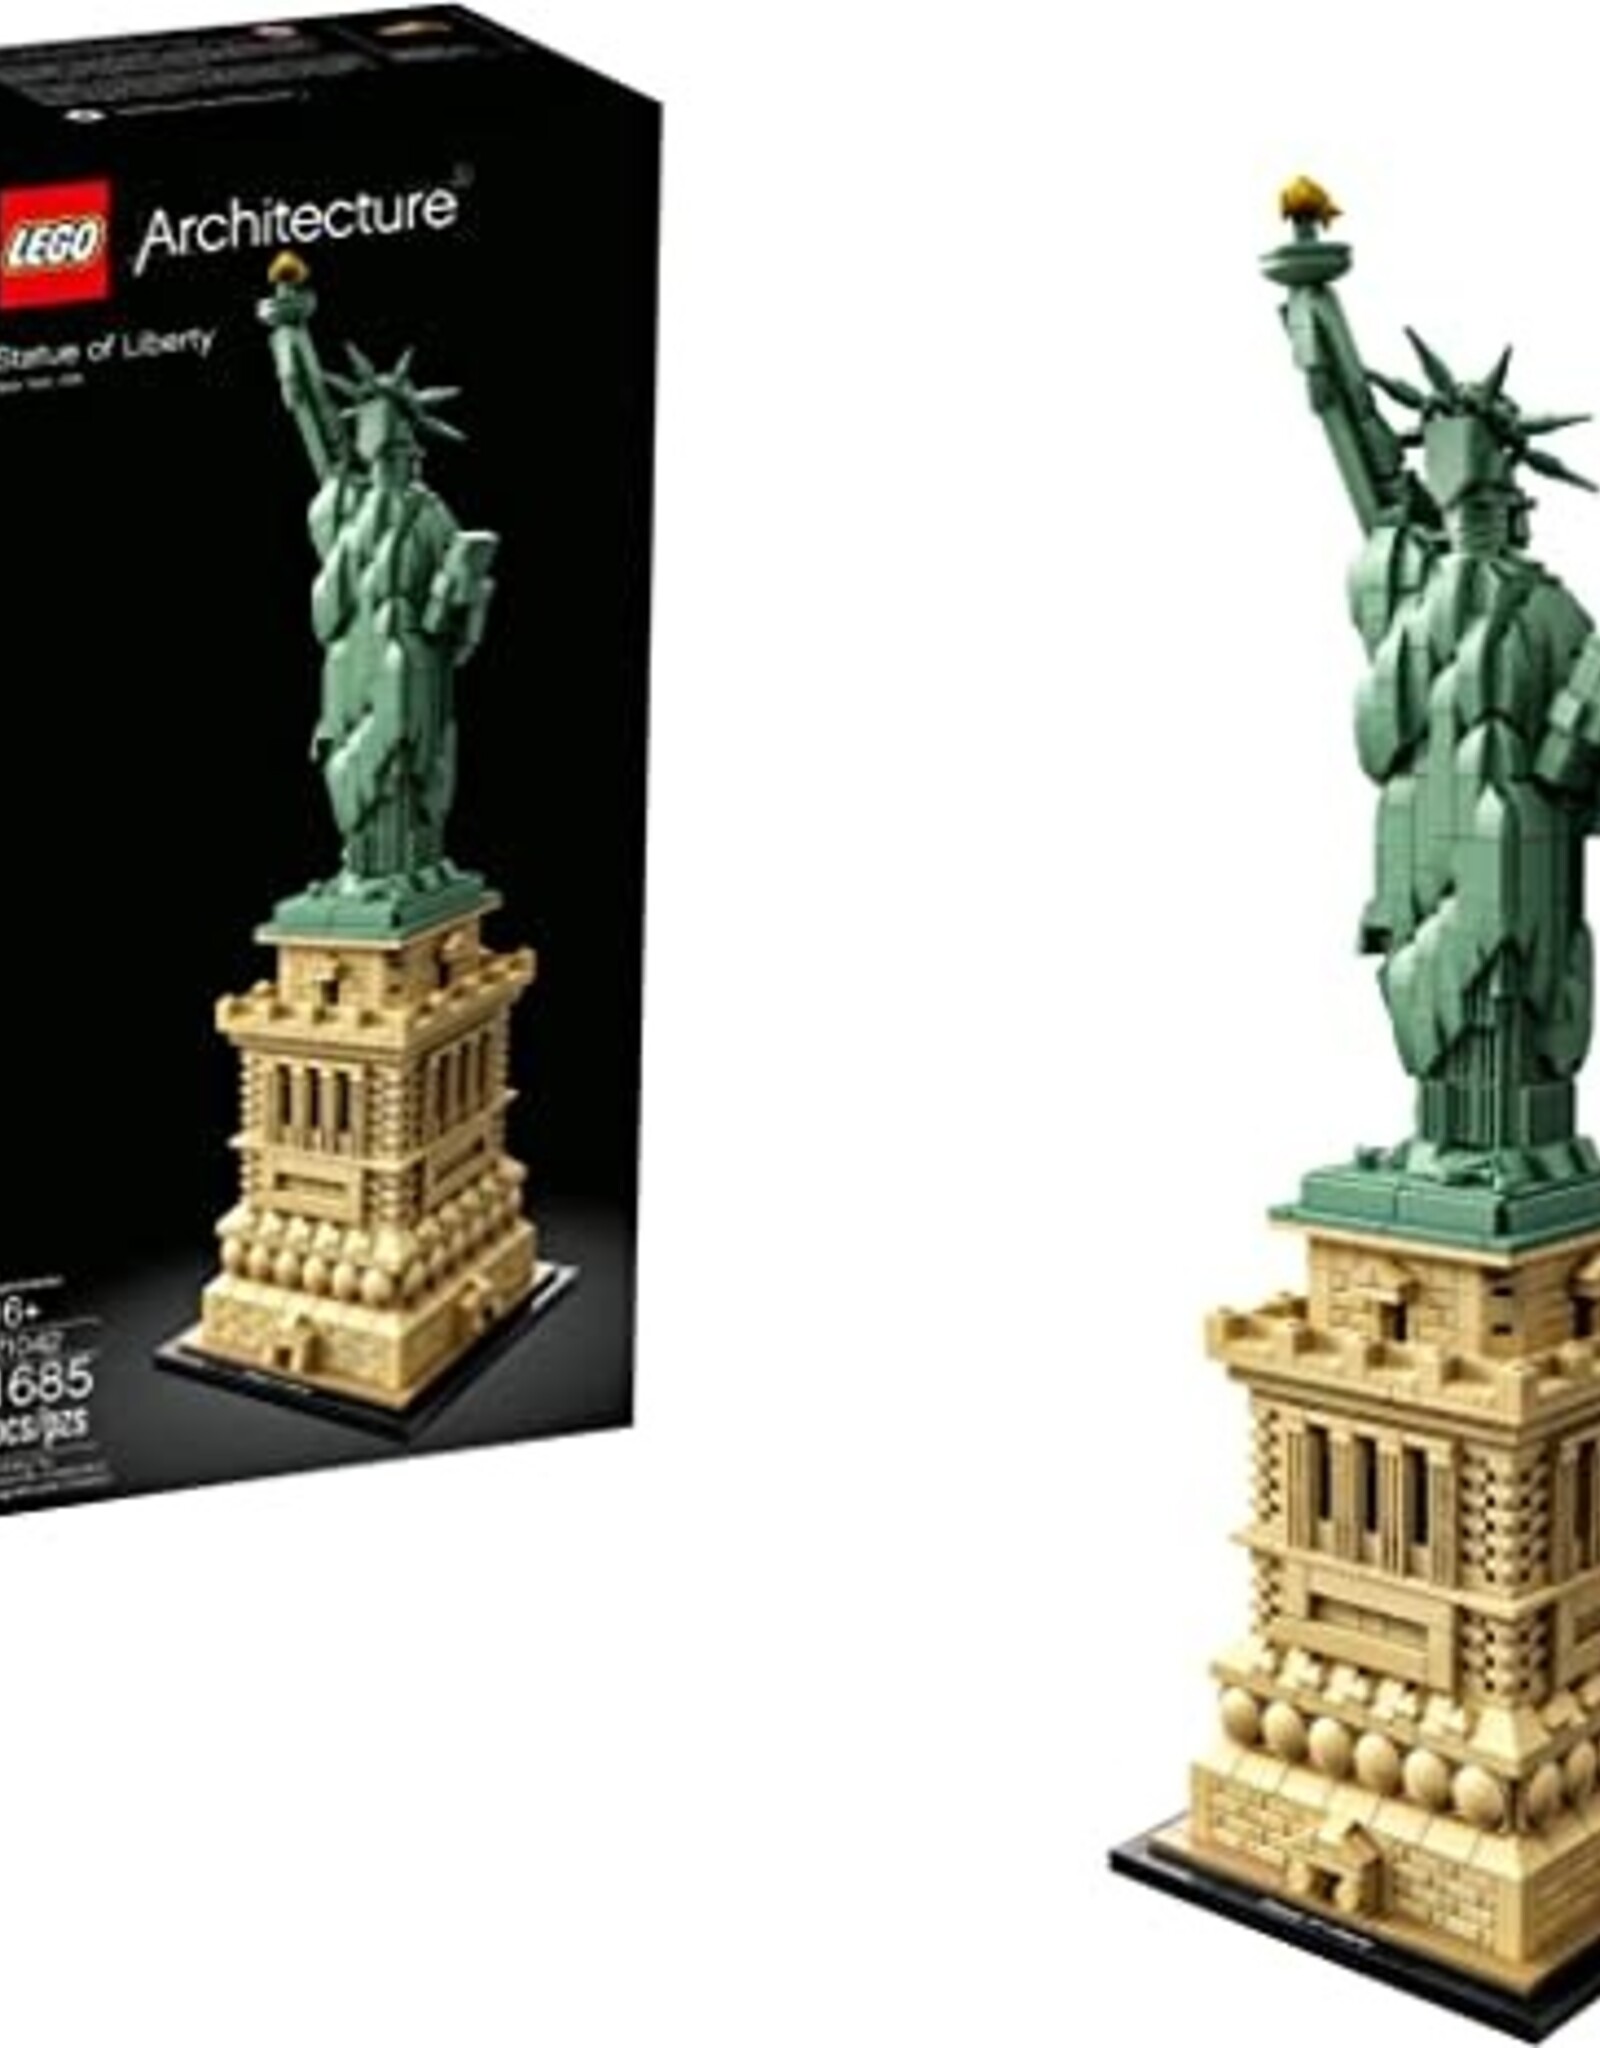 LEGO Lego Architecture - Statue of Liberty